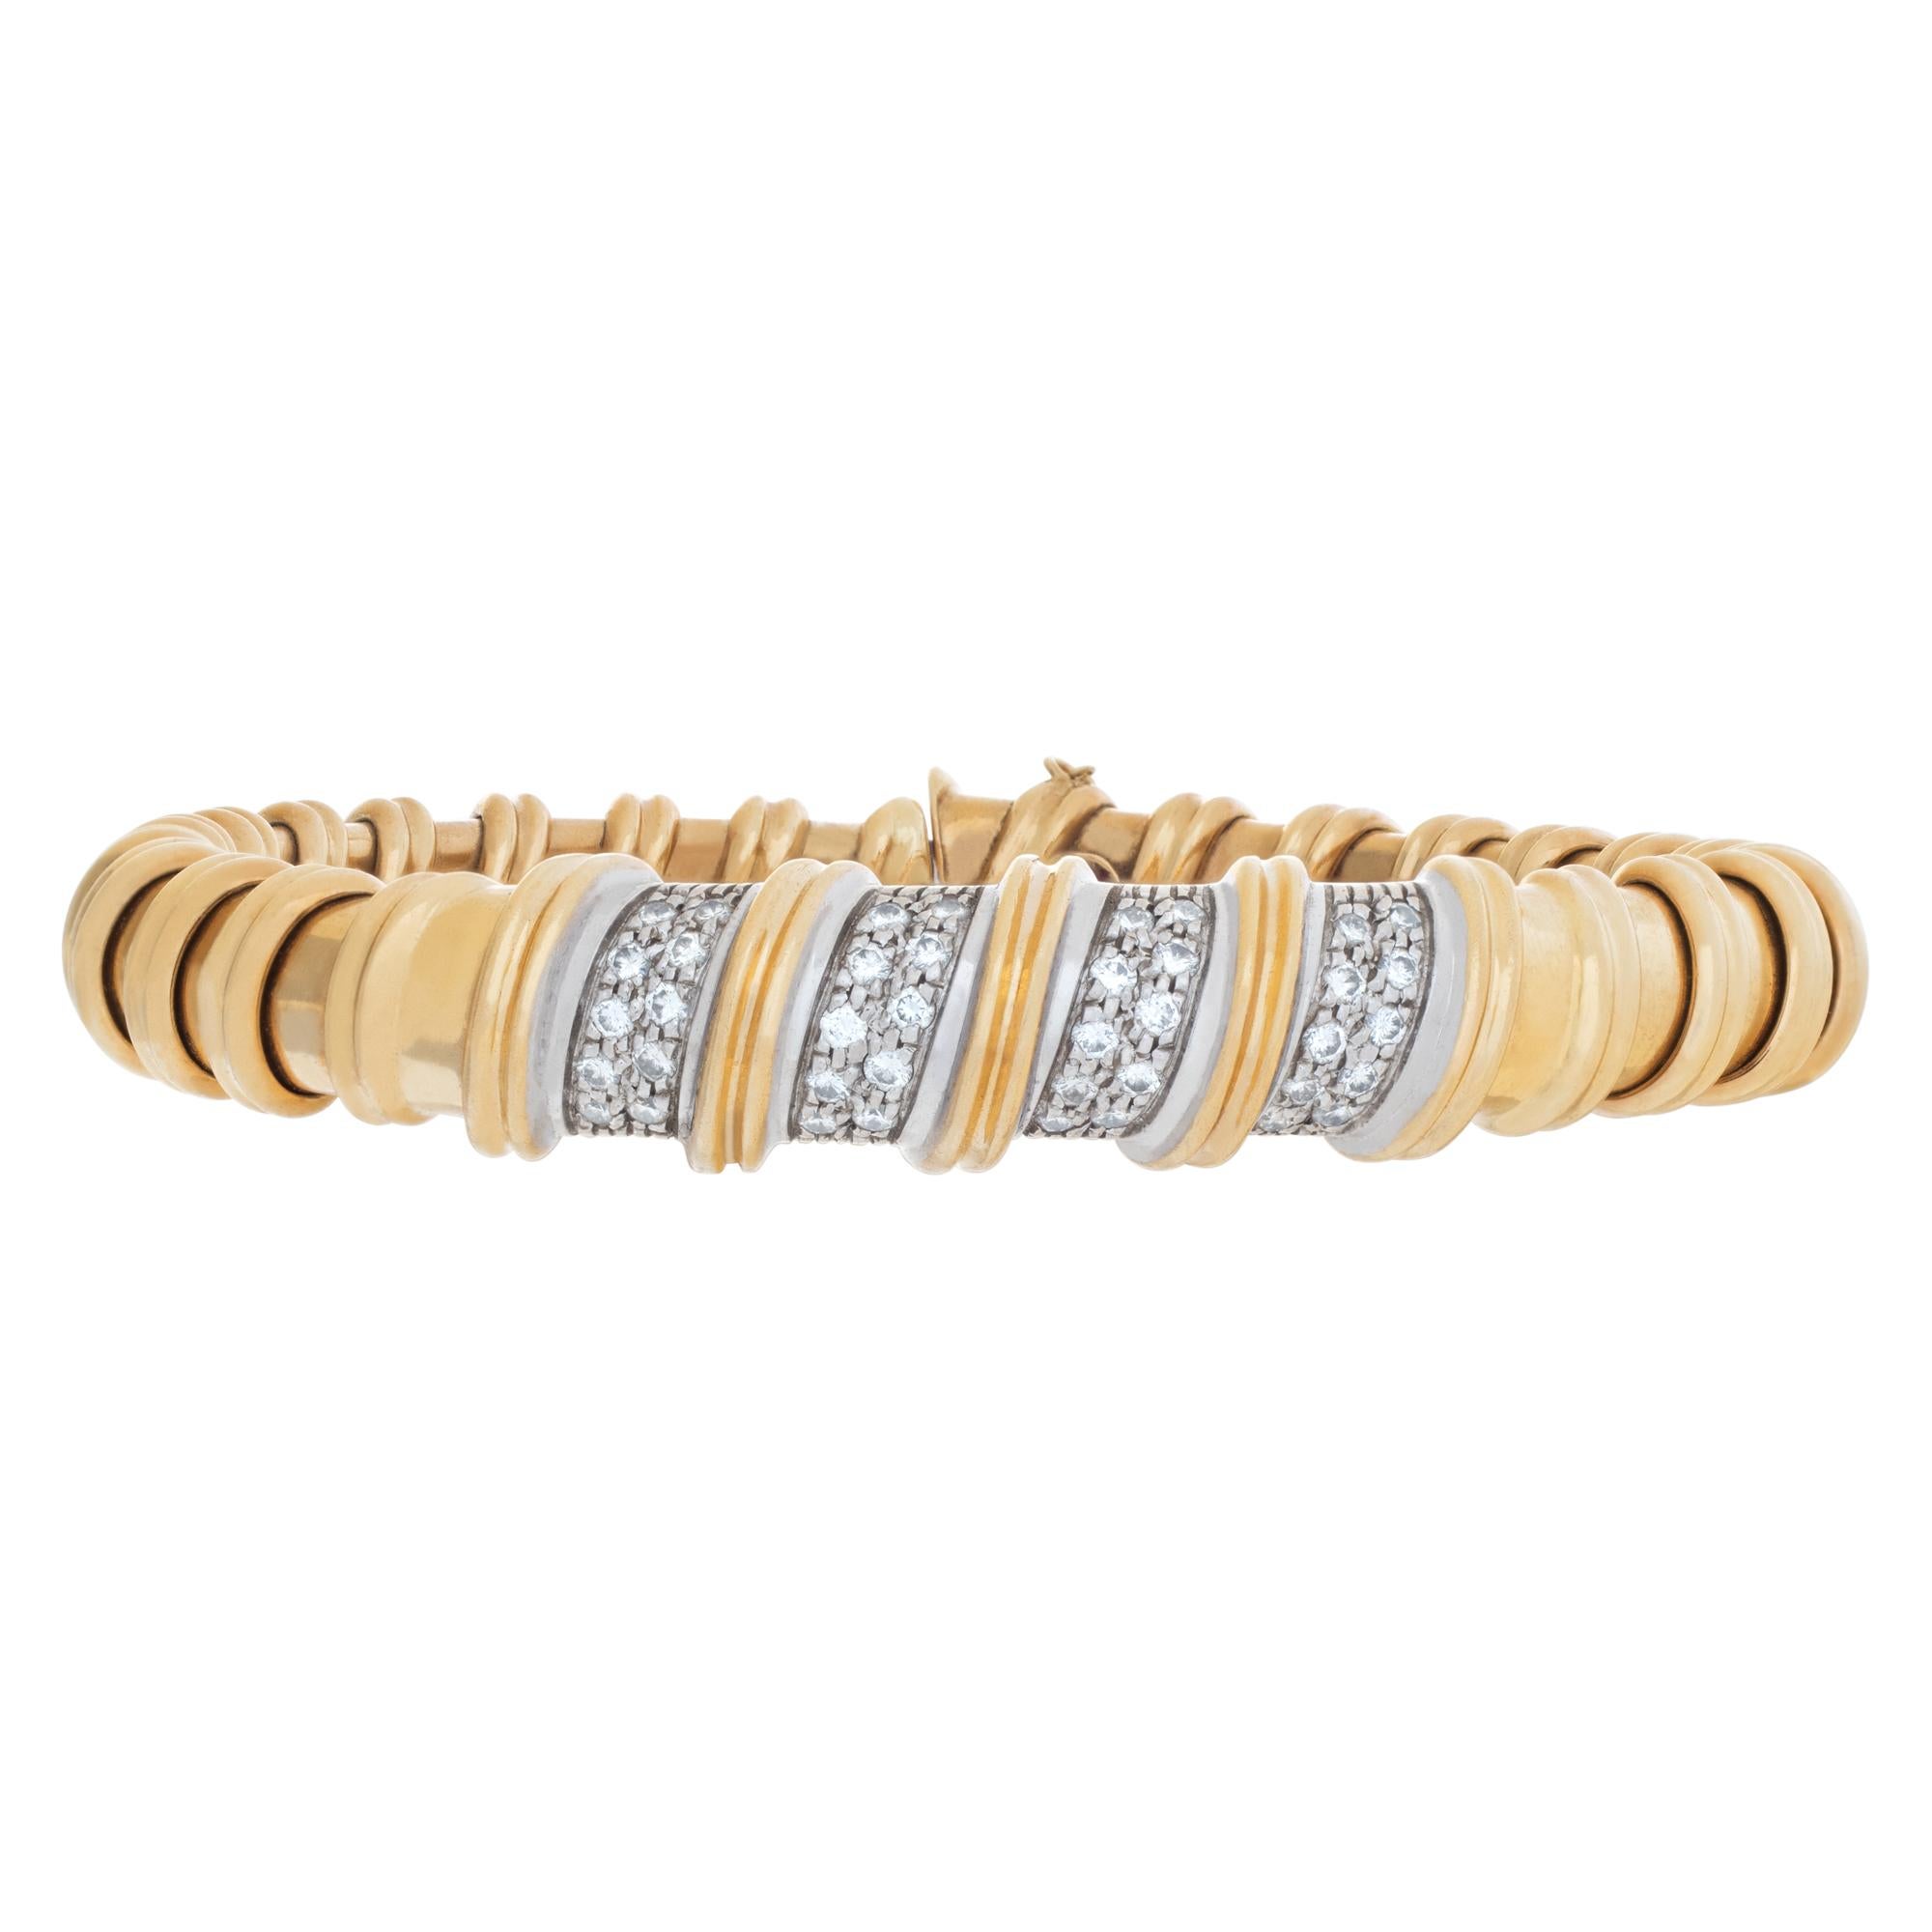 Stunning ribbed diamond bangle braceletin 18k yellow gold with approximately 0.50 carats in pave diamonds. Signed 